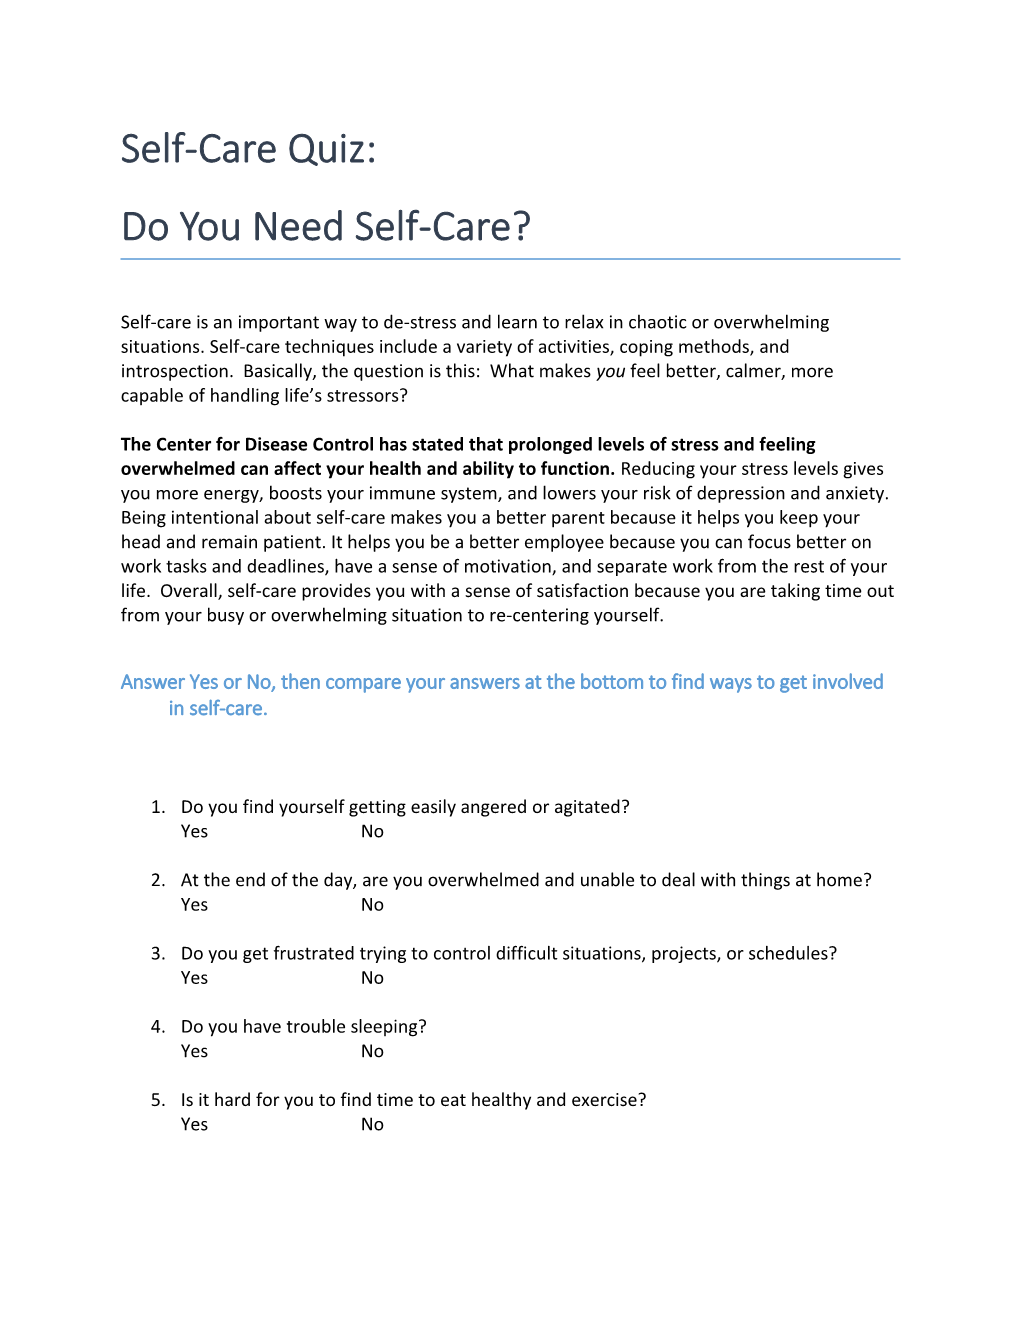 Do You Need Self-Care?